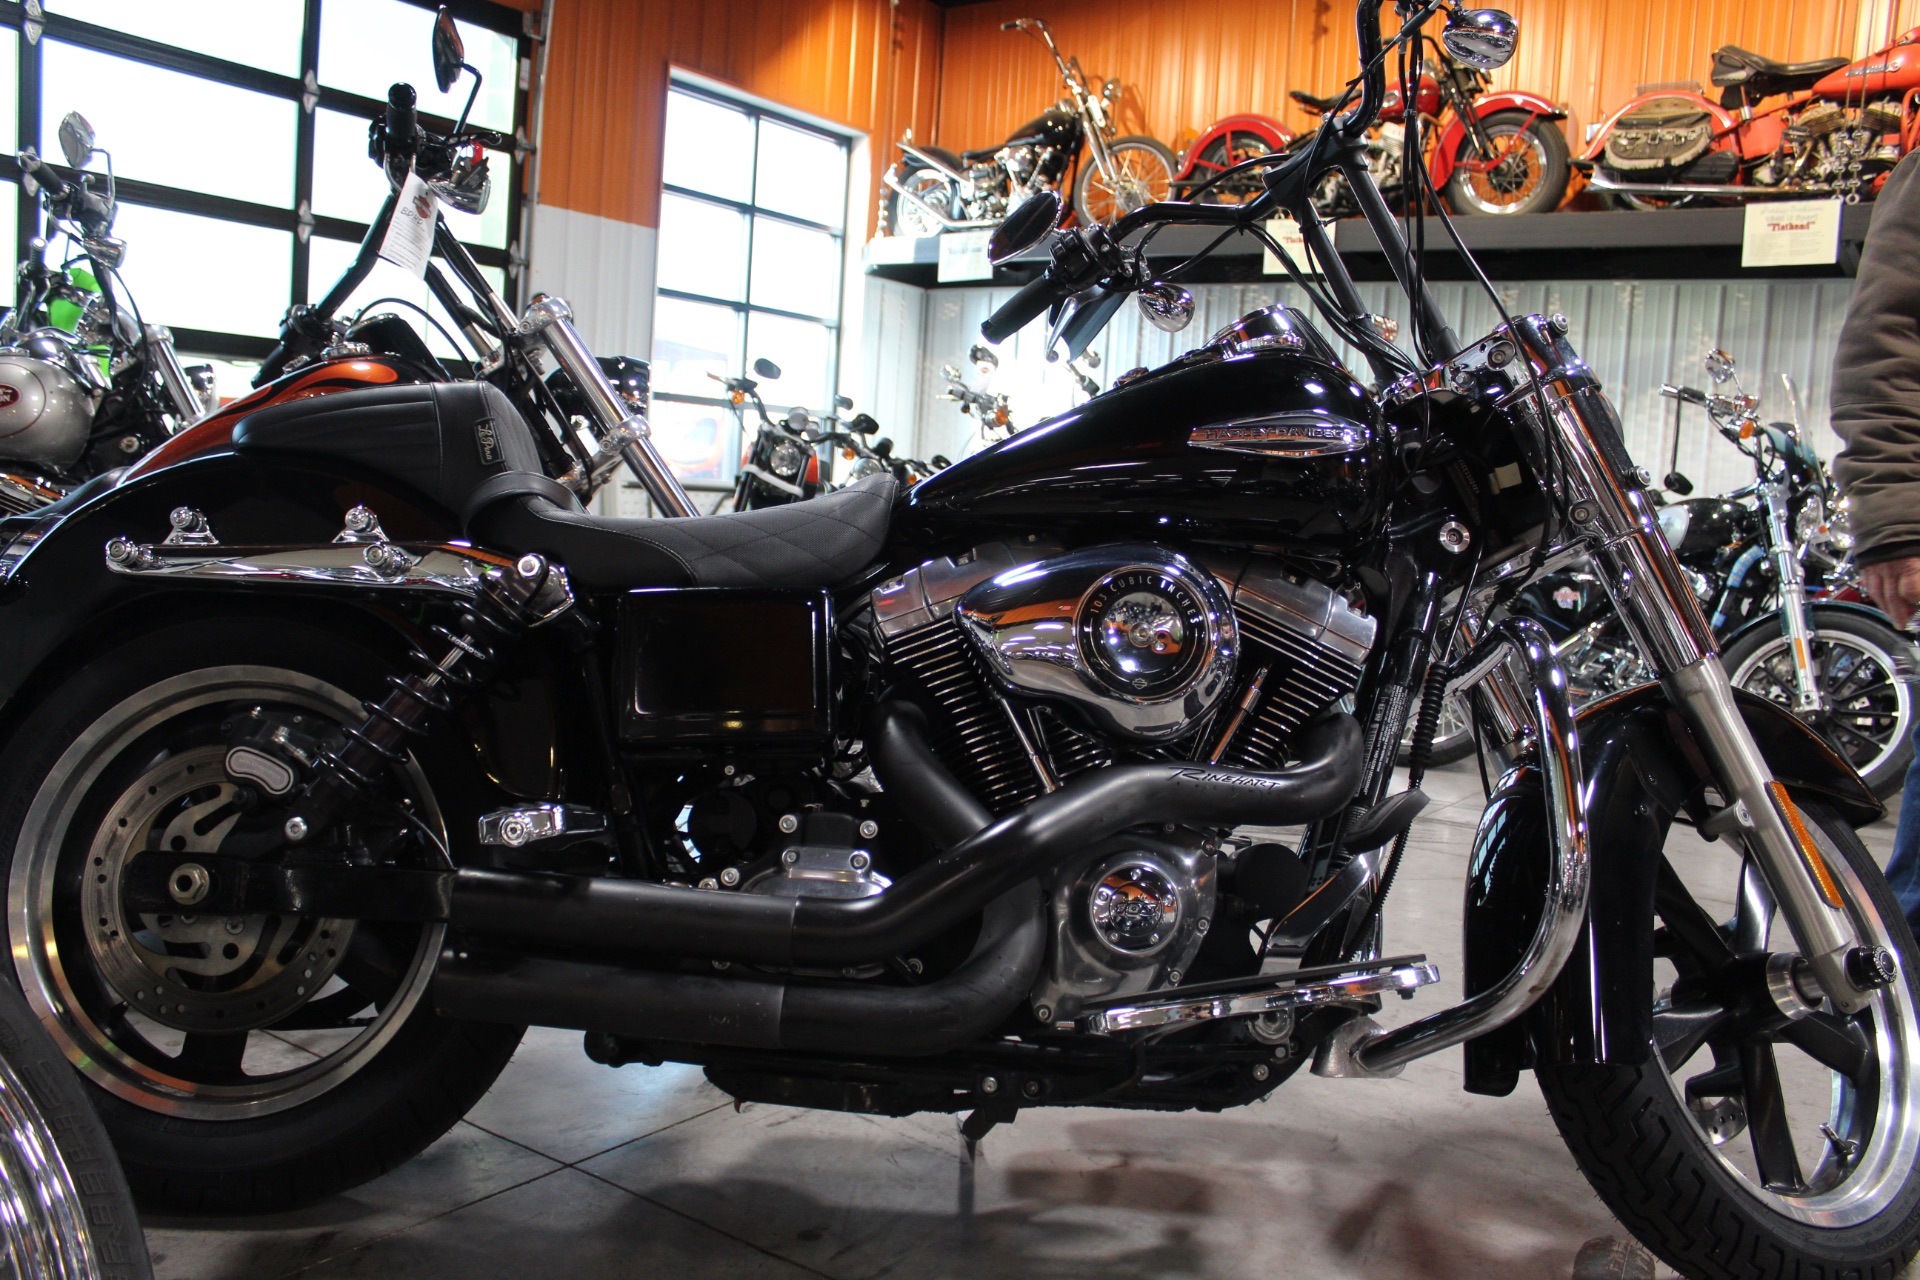 2012 Harley-Davidson FLD103 in Marion, Illinois - Photo 3